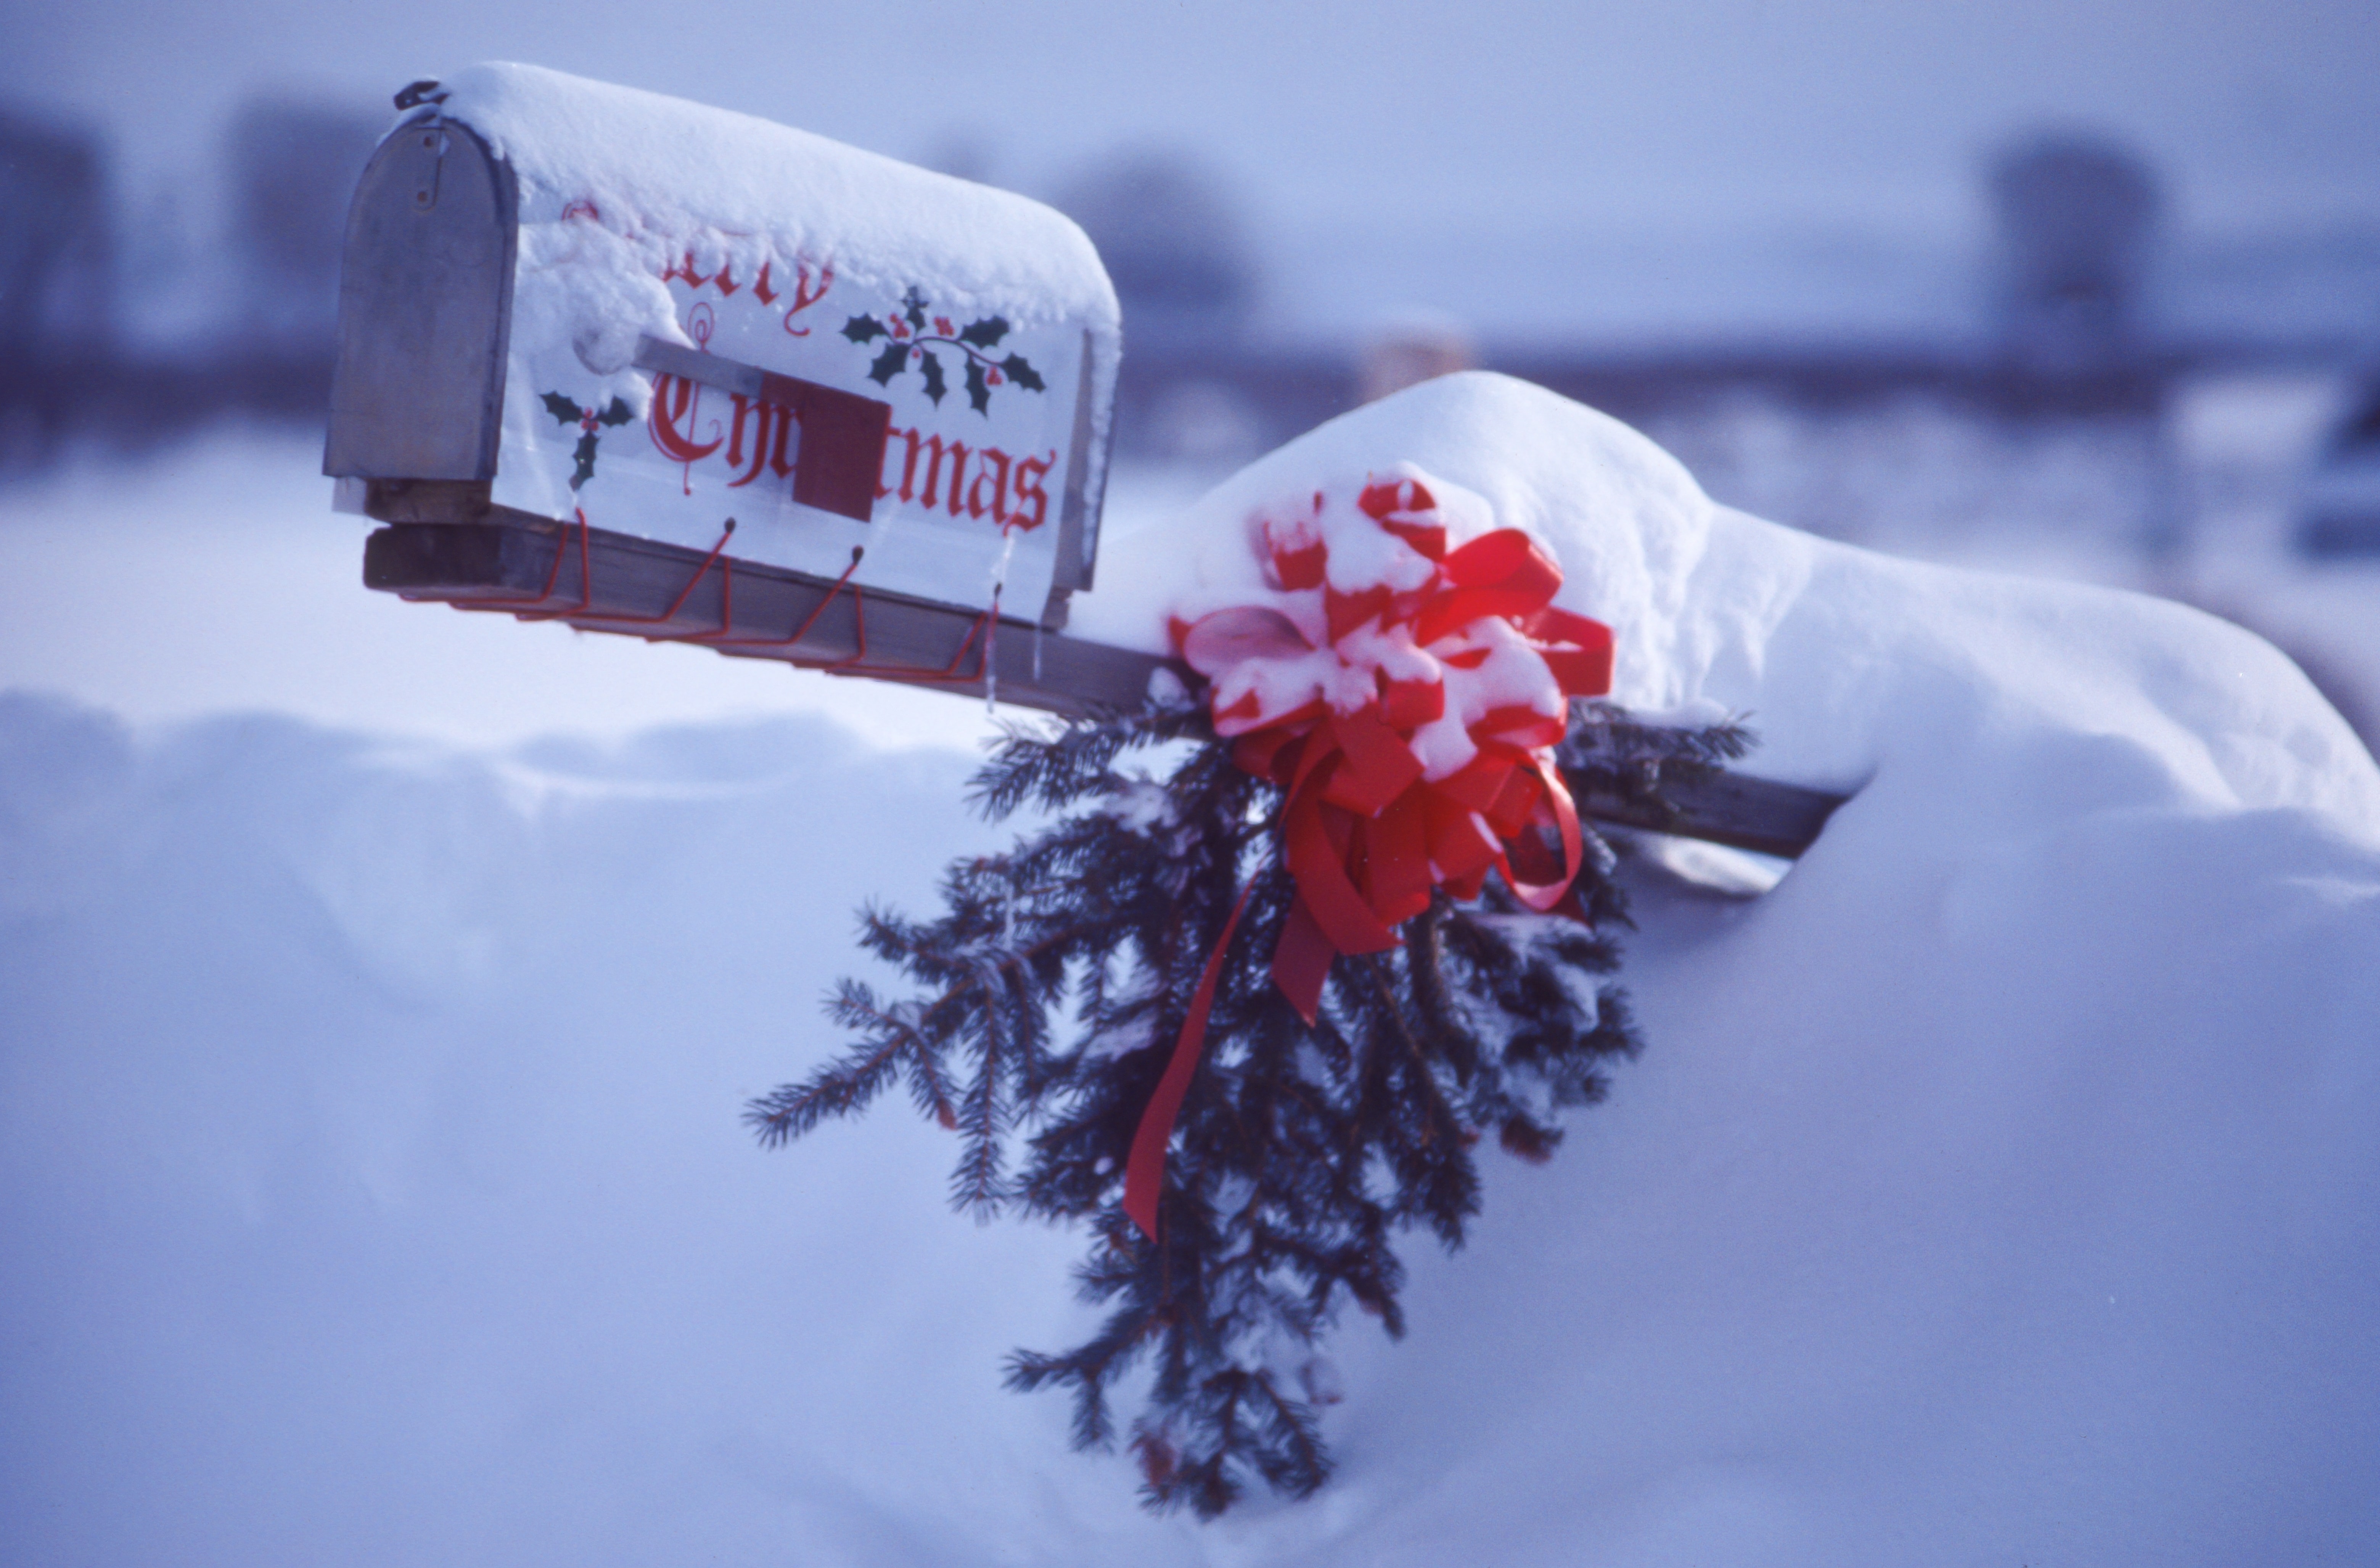 Snowy Christmas mailbox